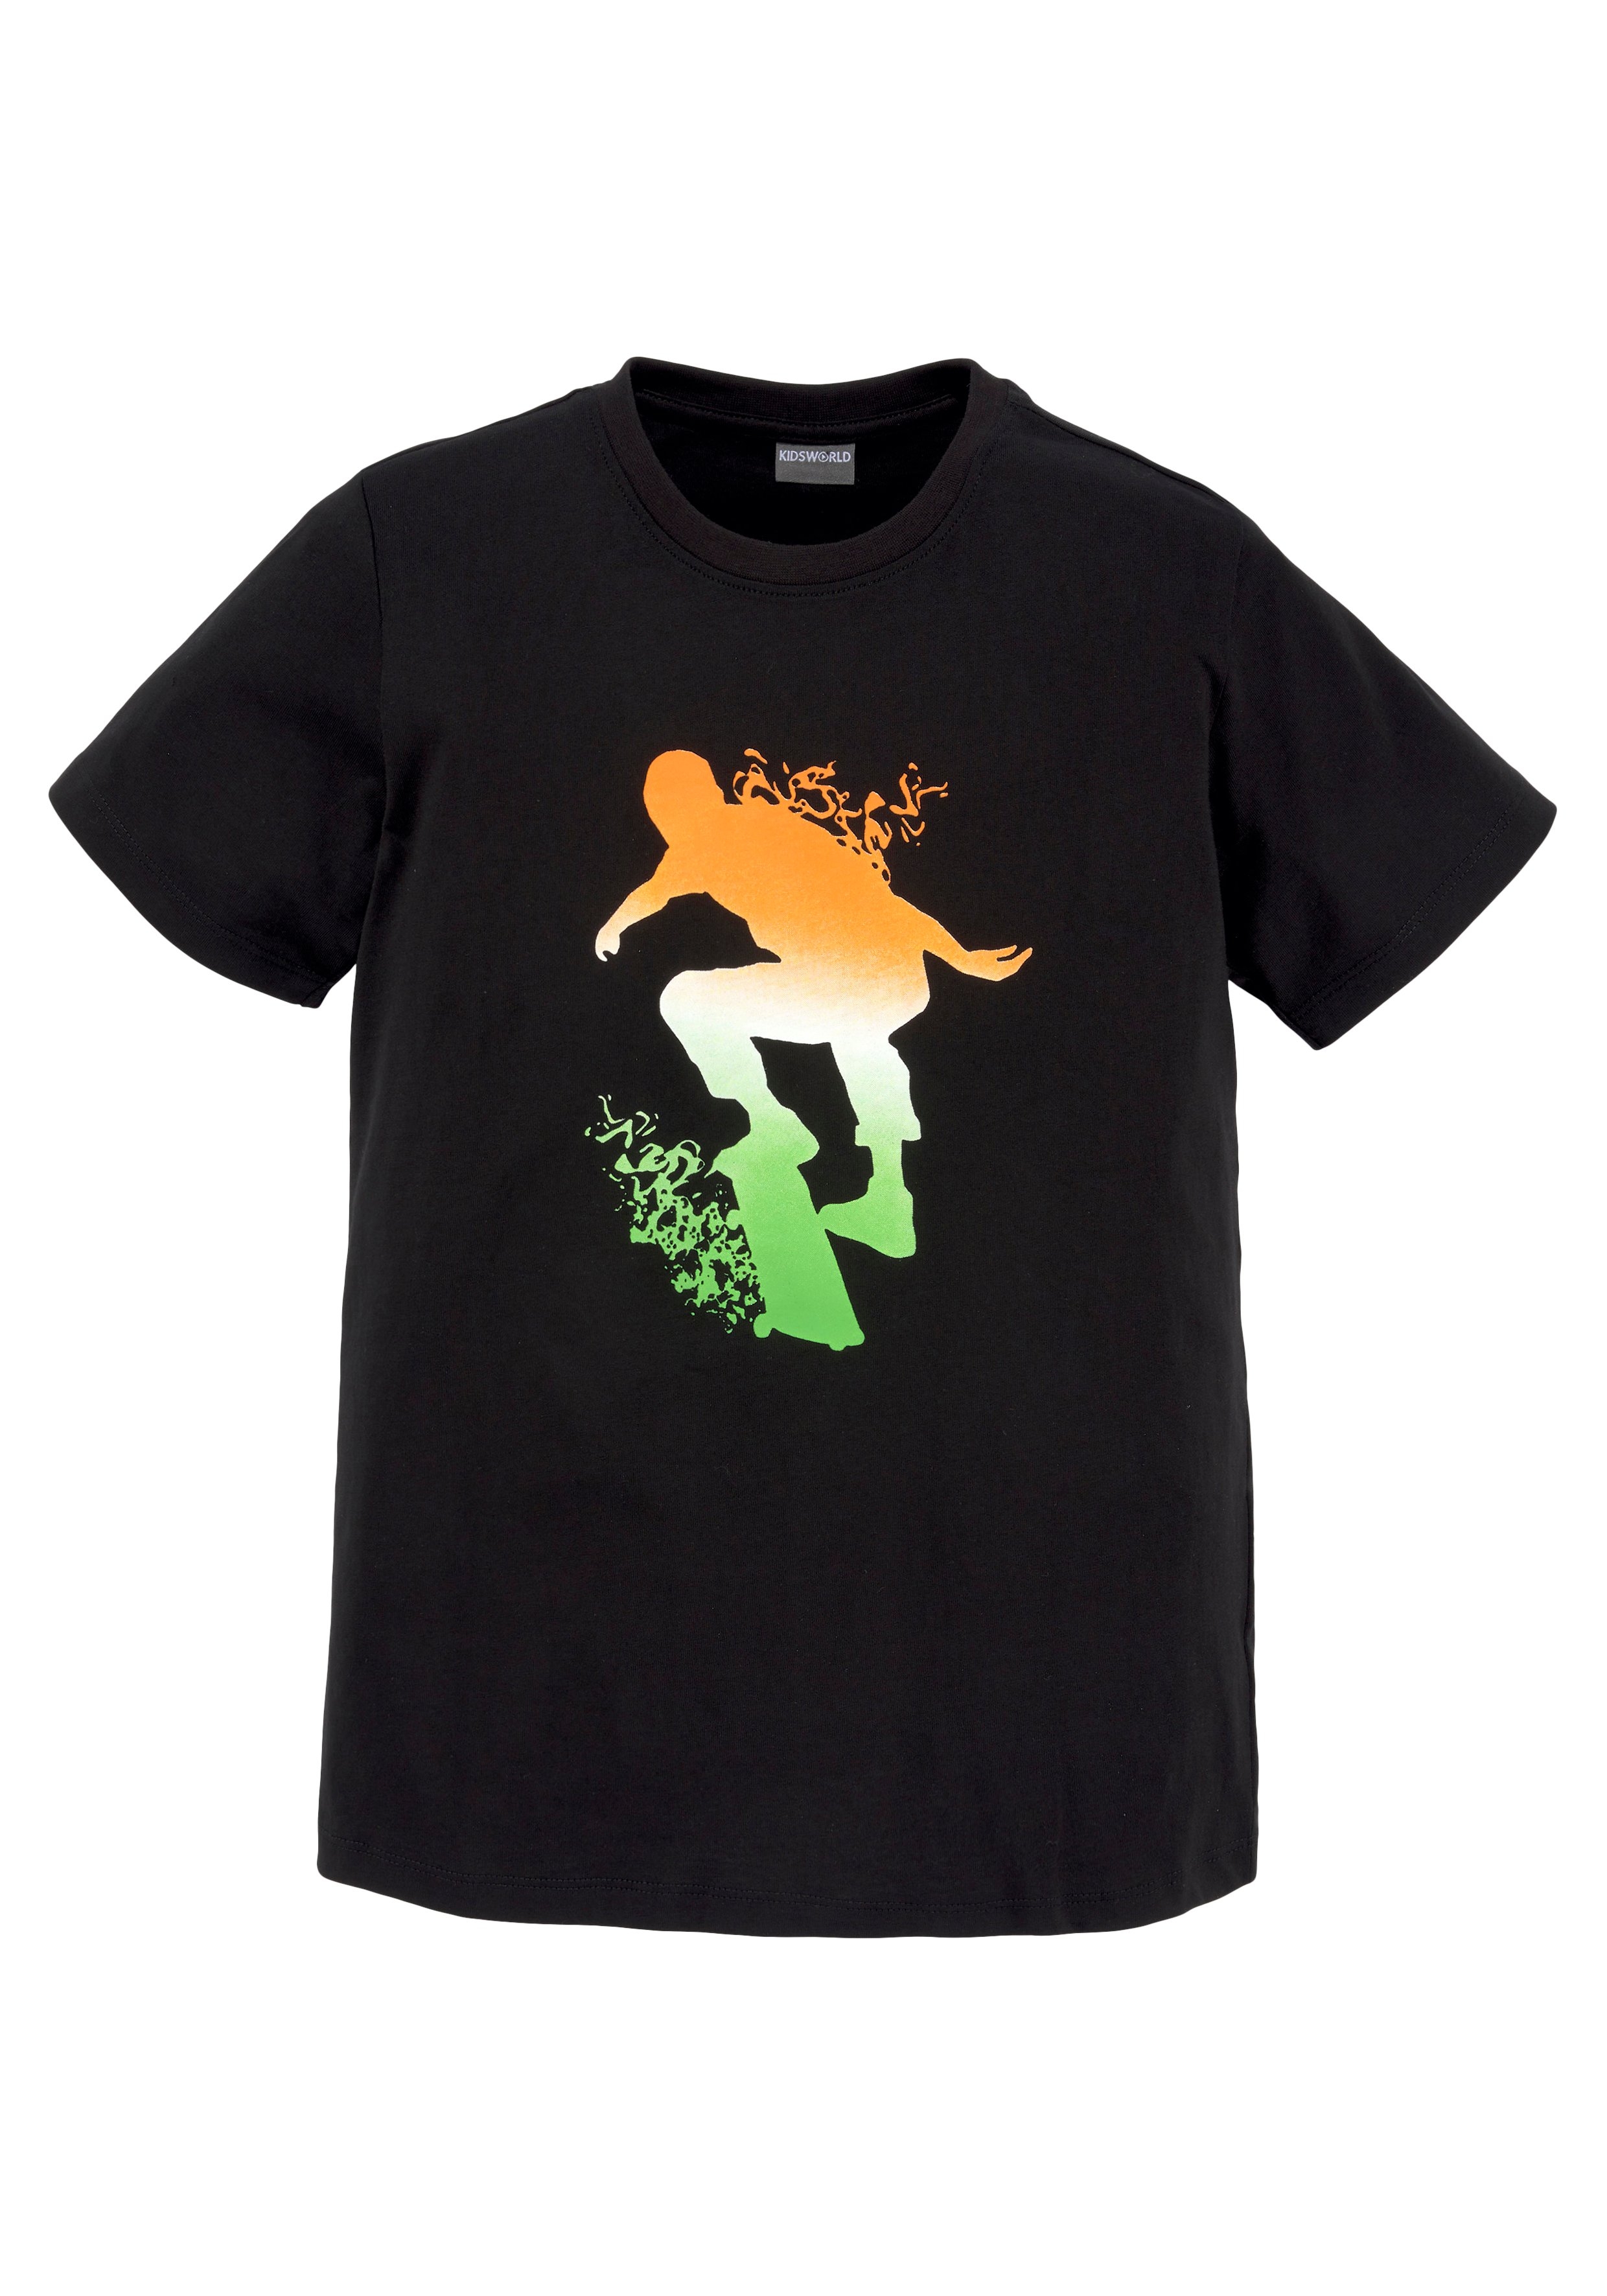 KIDSWORLD T-shirt Skating Print snel gevonden | OTTO